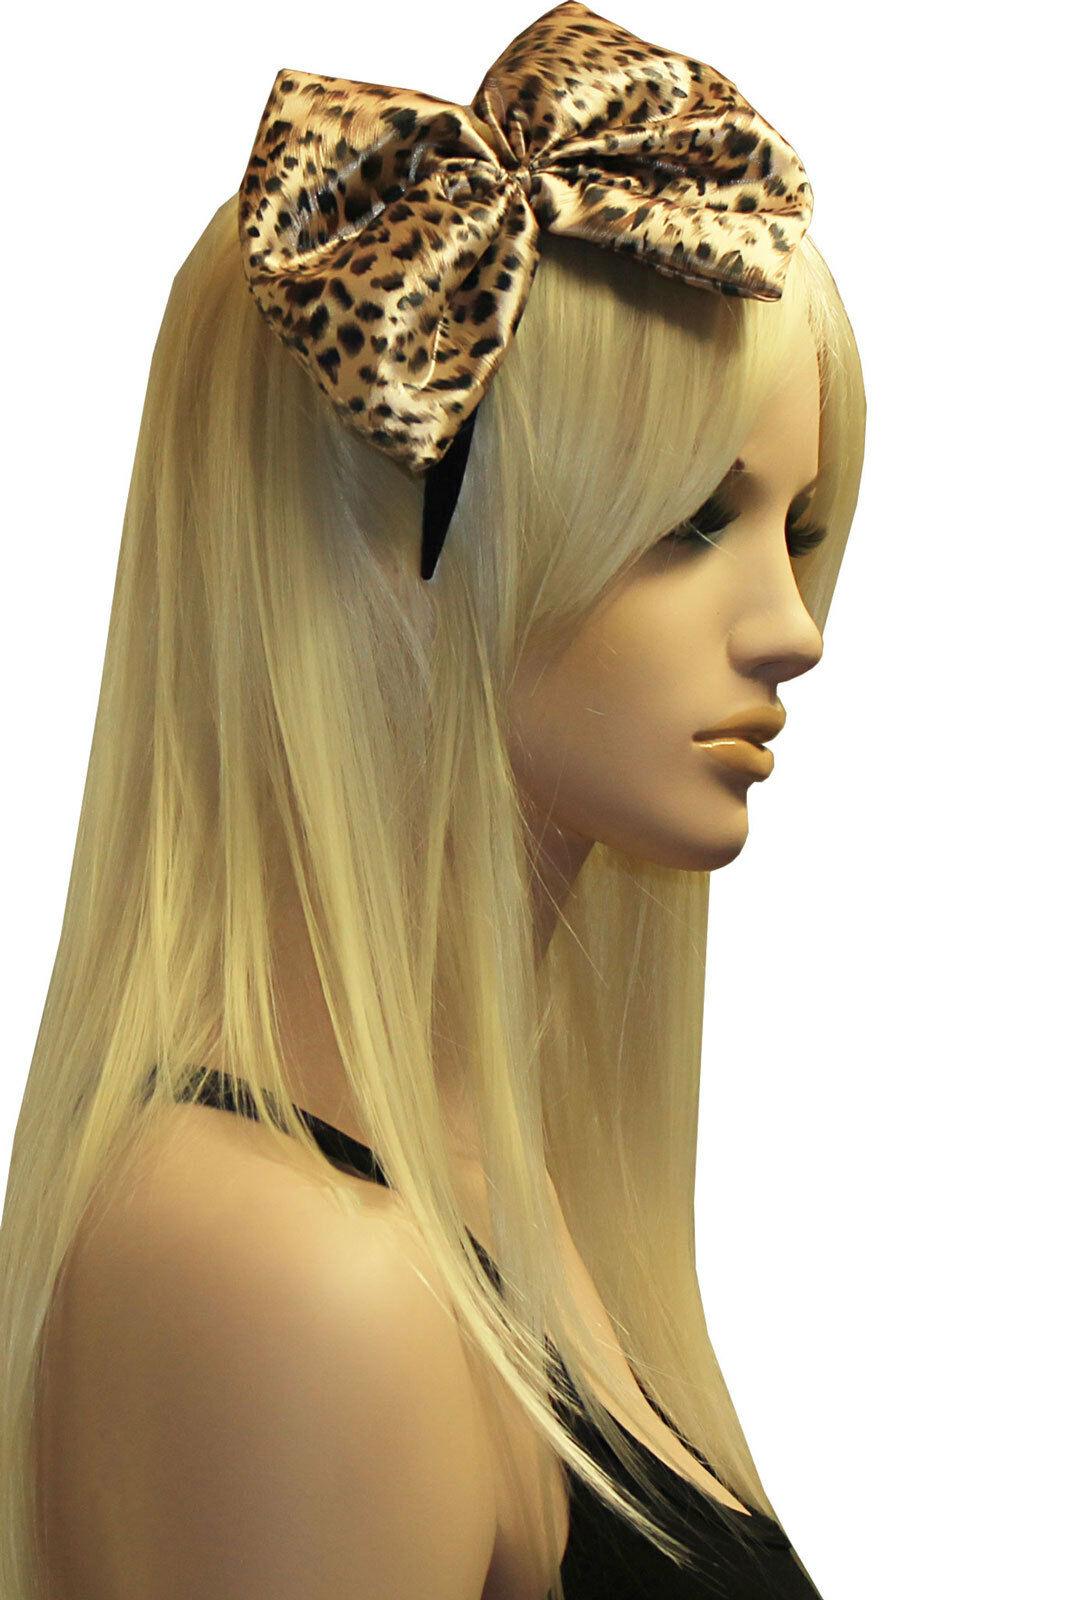 Ladies Leopard Flower Headband Stretchy Alice Hair Band Fancy Dress Party Wear - Labreeze